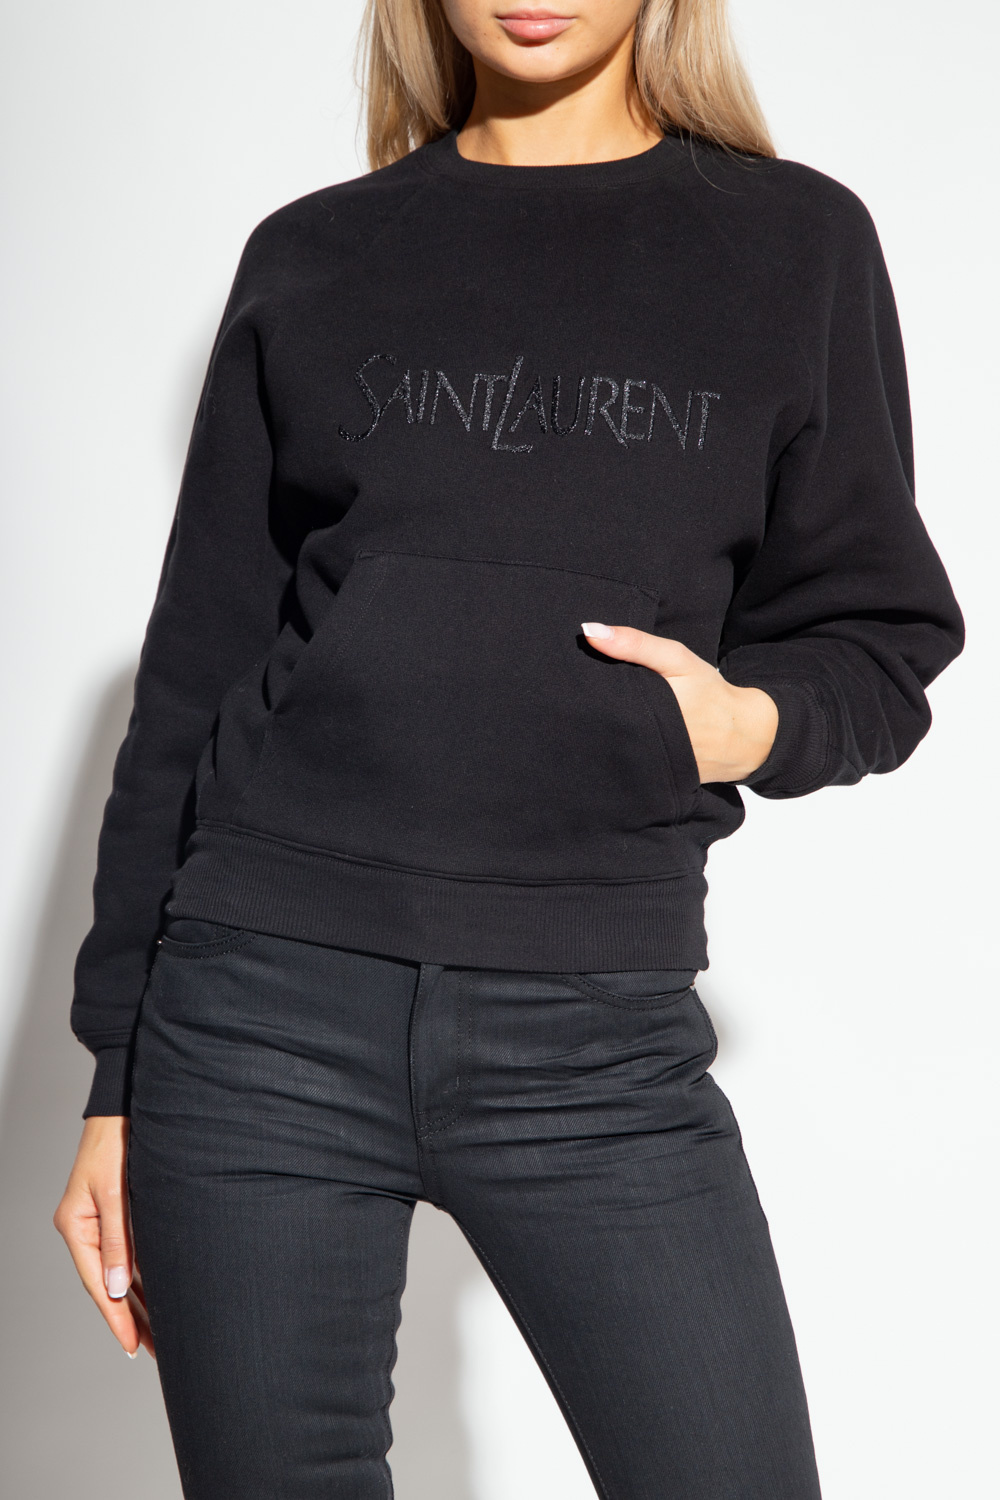 Saint Laurent Insulated sweatshirt